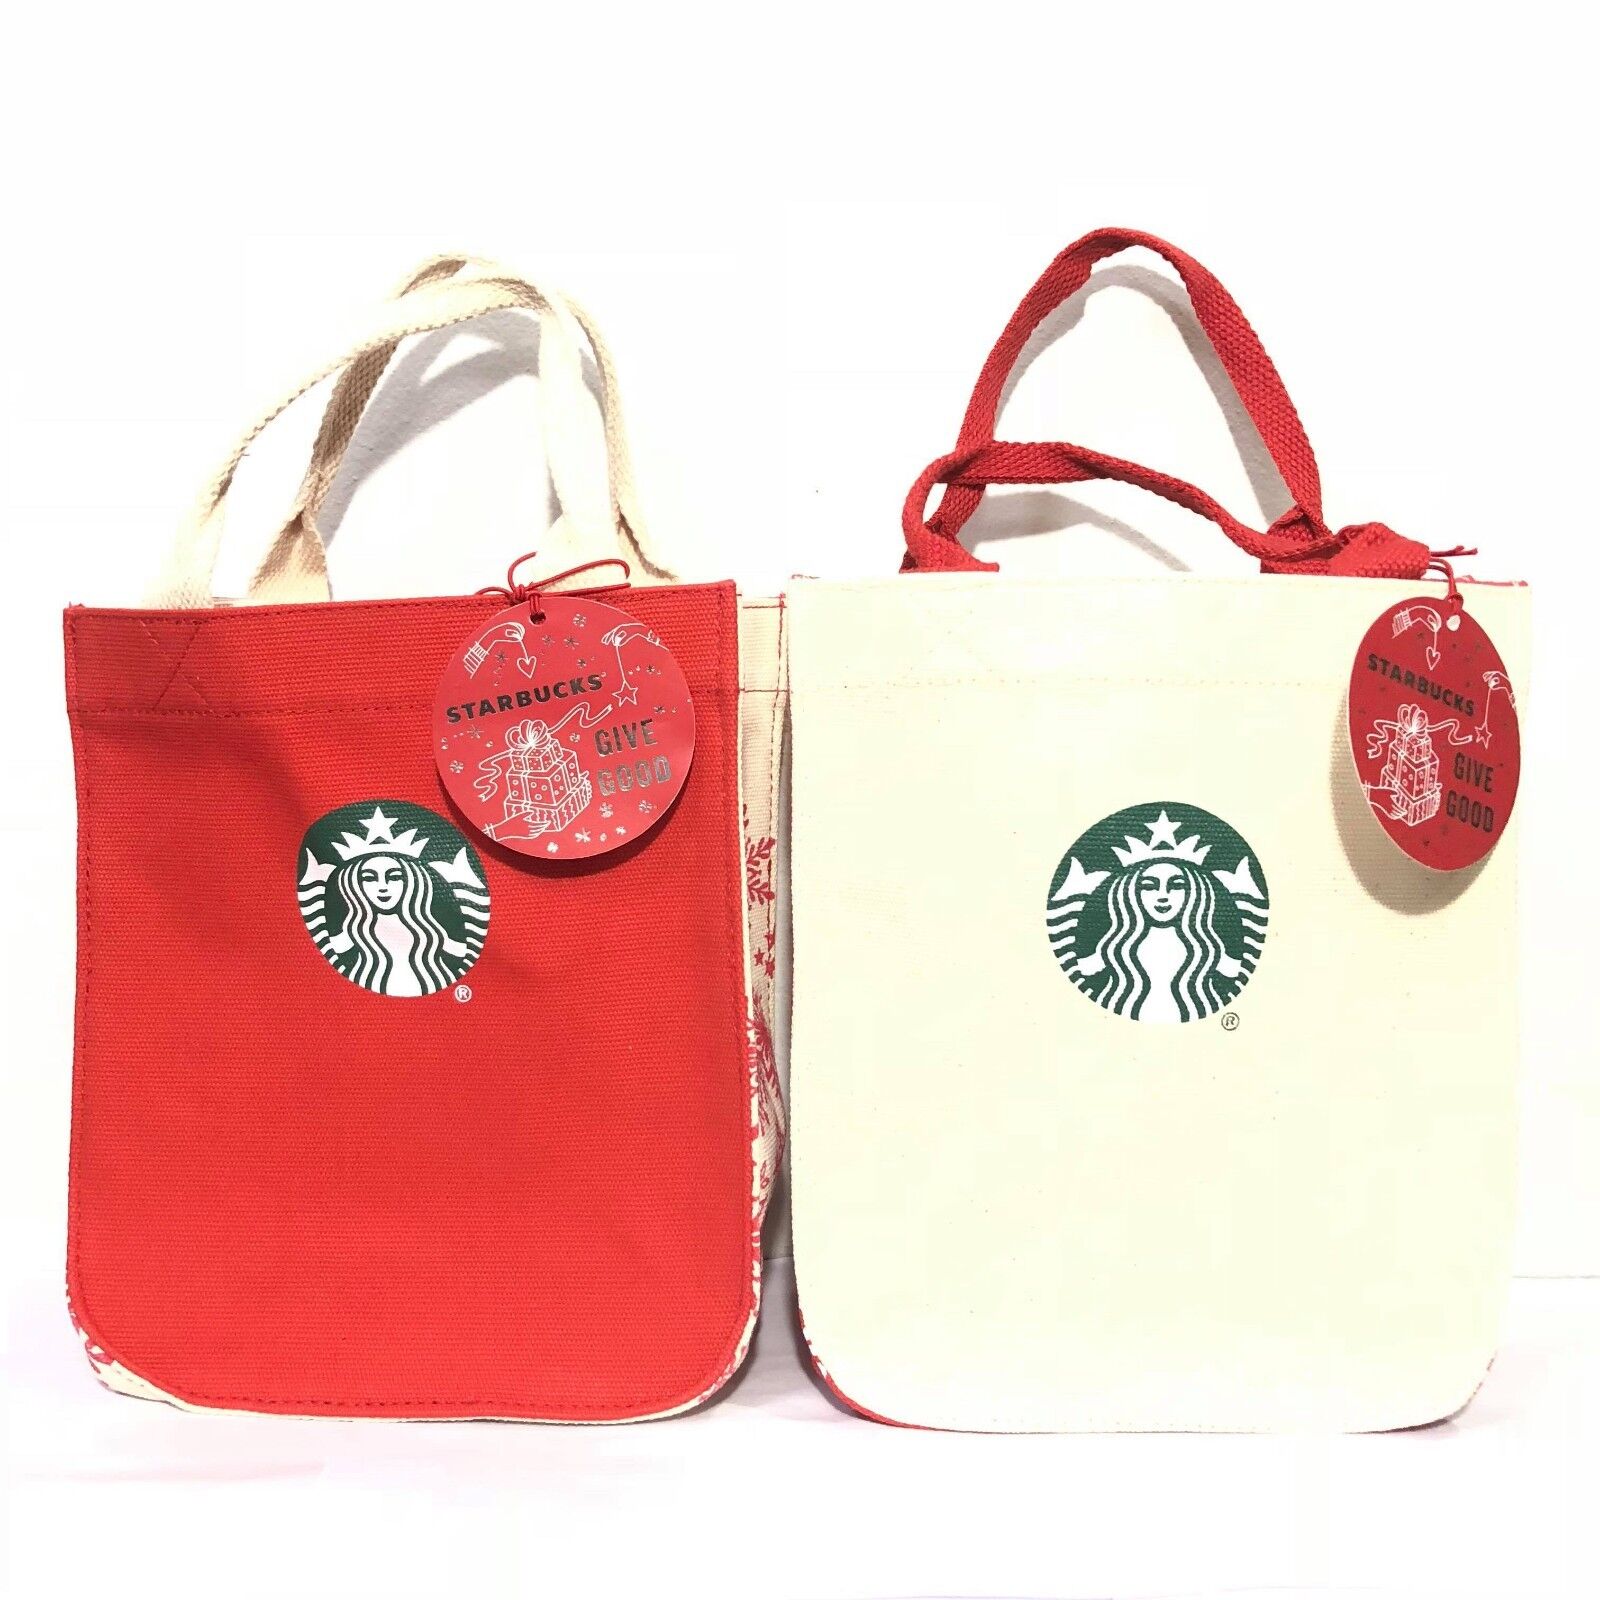 Set 2Pcs Starbucks Totes Bag Cotton White Red Snow Flake Merch